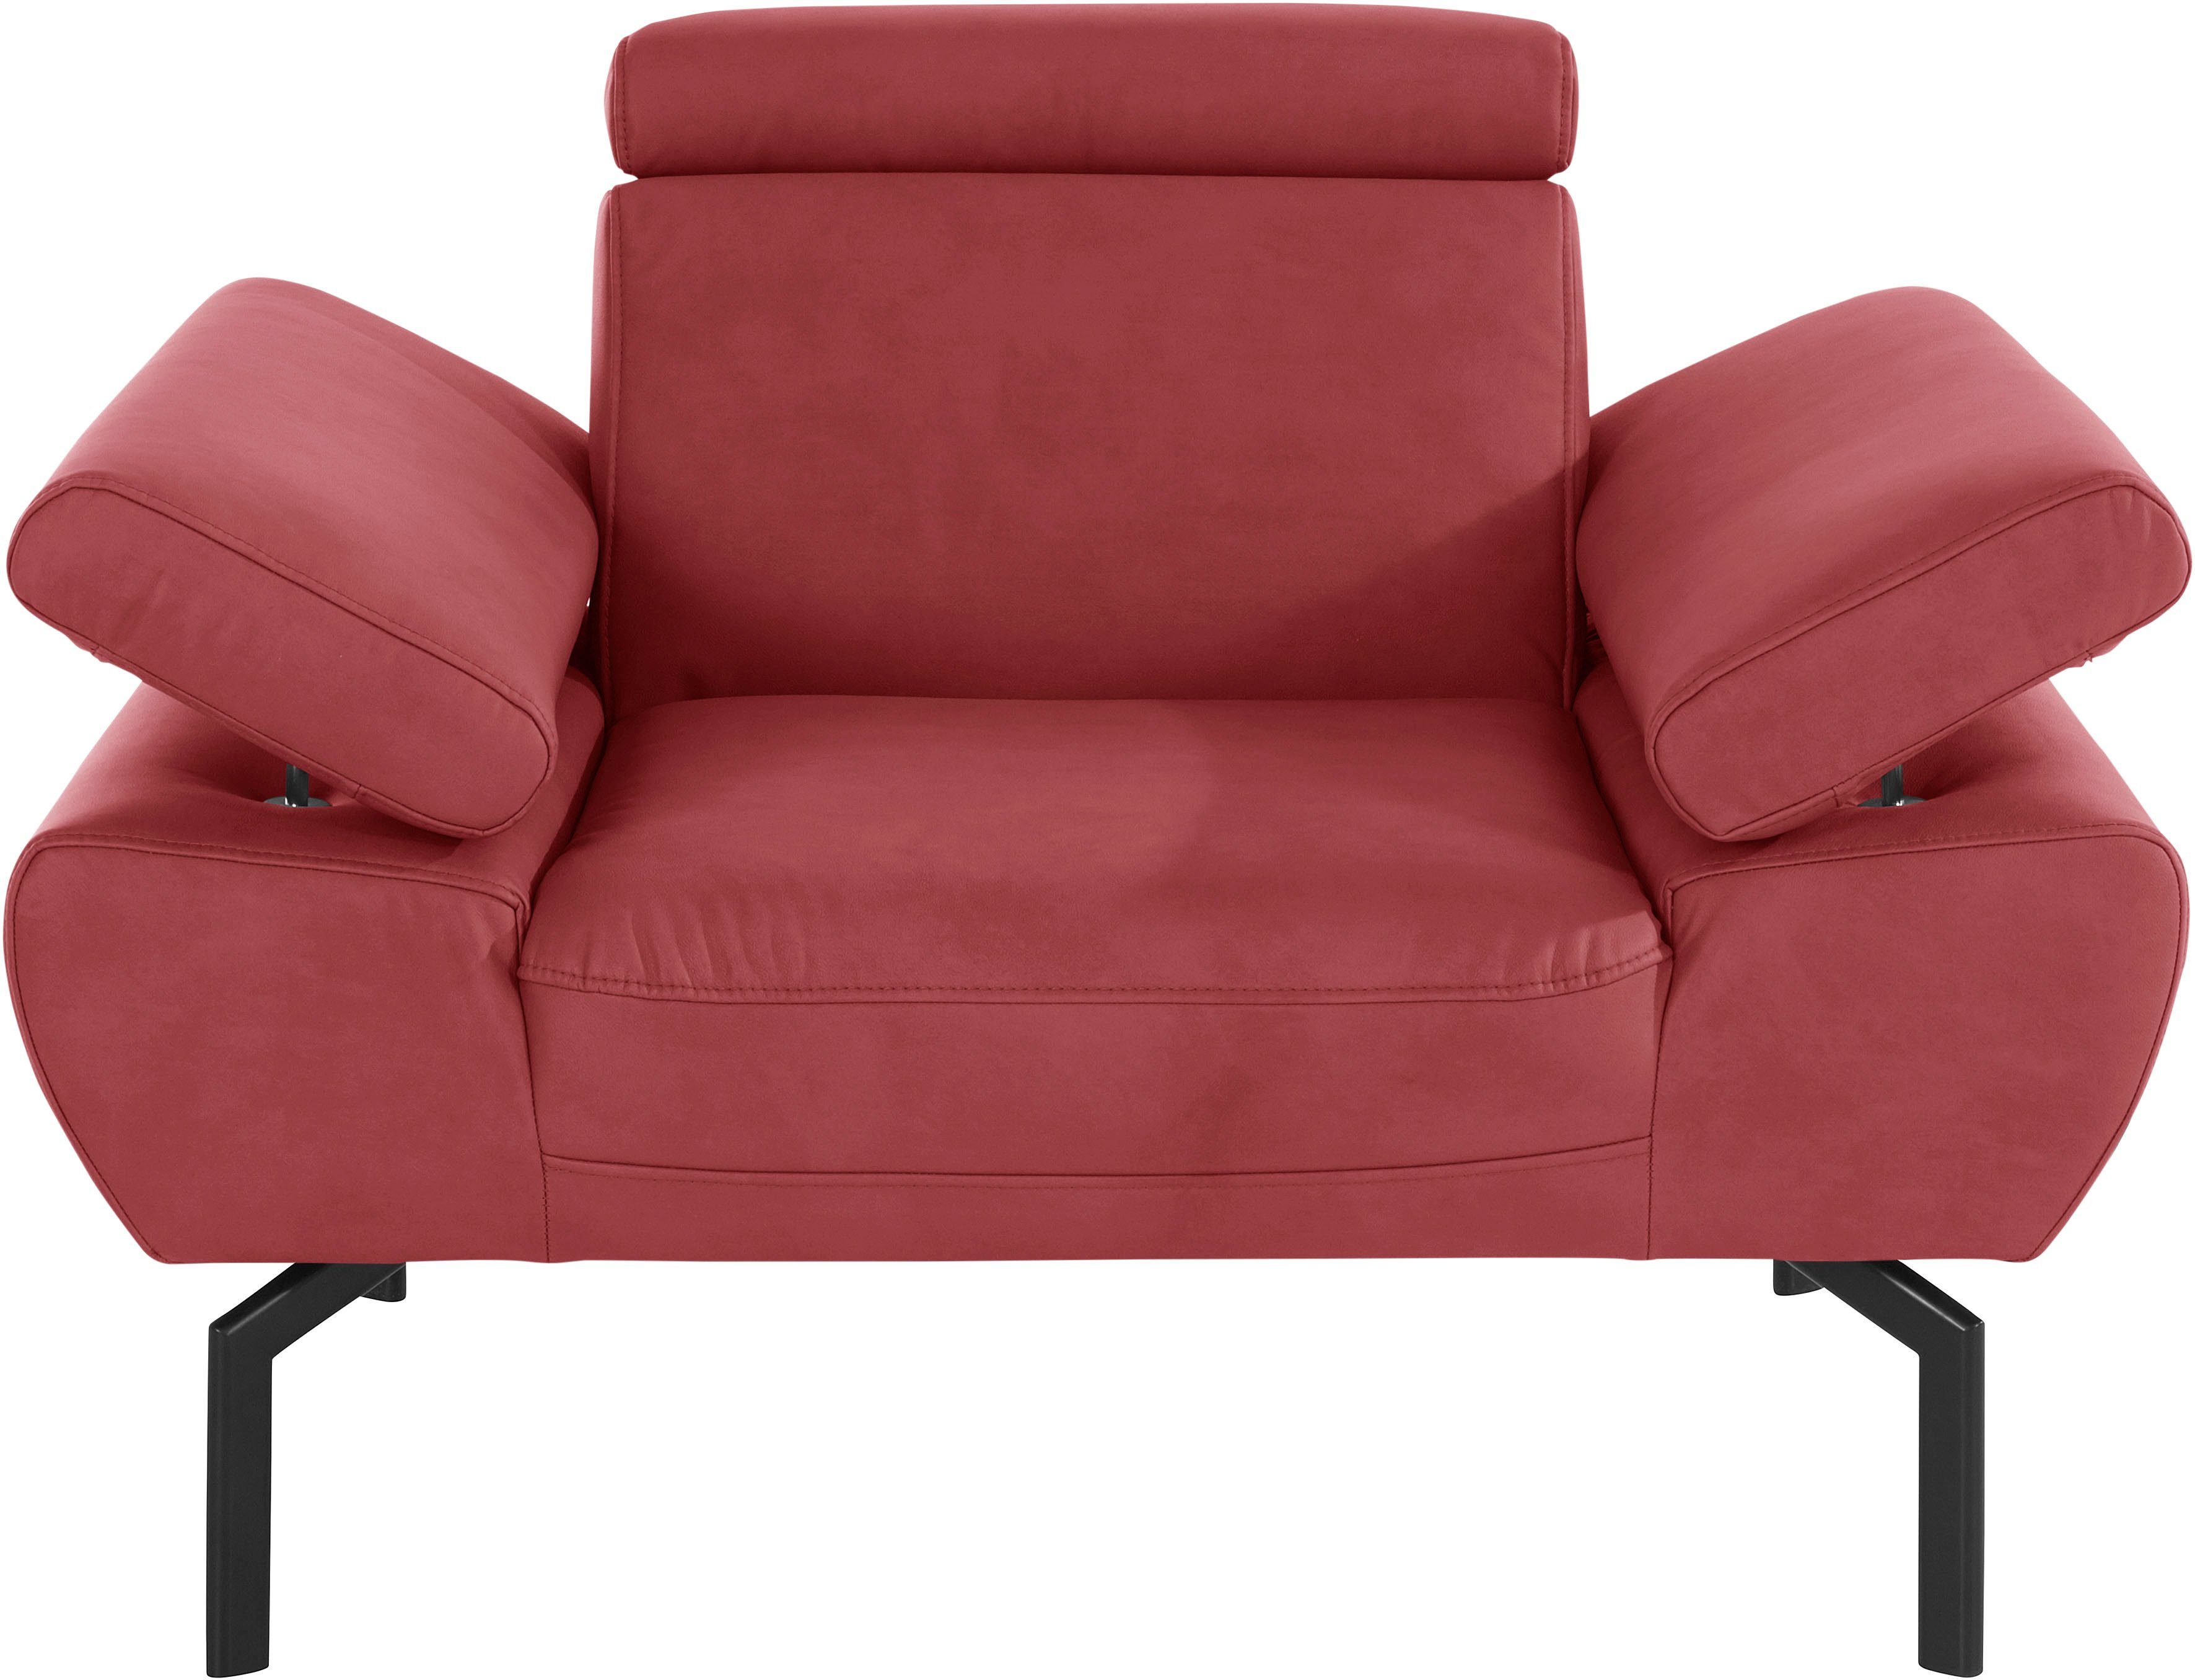 Places of Style Trapino Lederoptik Sessel Luxus-Microfaser mit wahlweise Luxus, Rückenverstellung, in